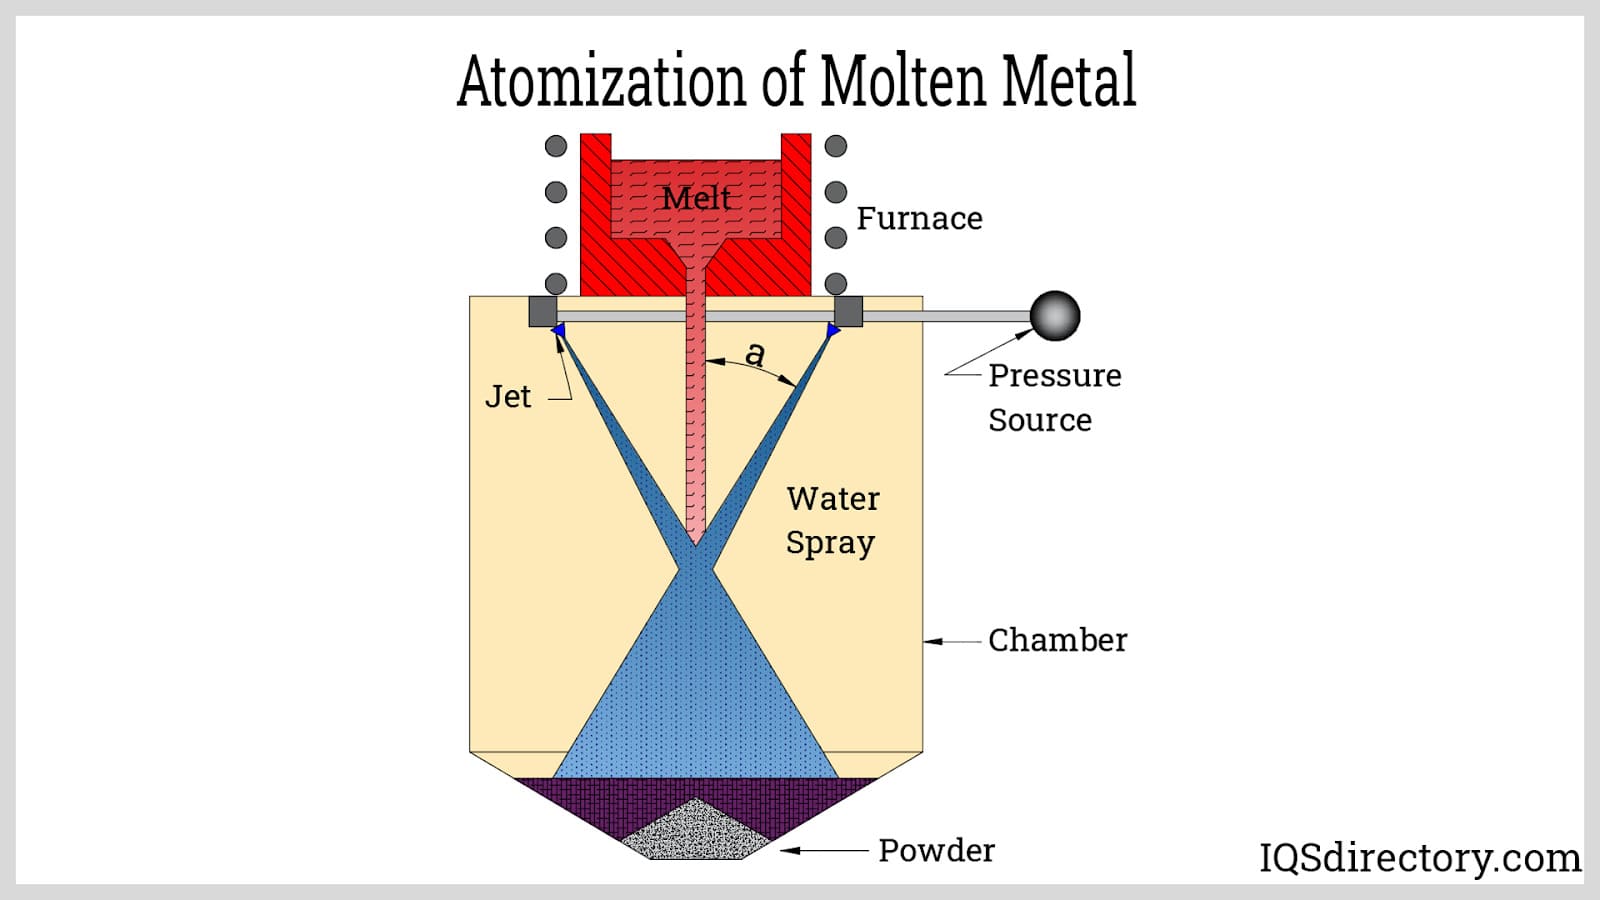 Atomization of Molten Metal